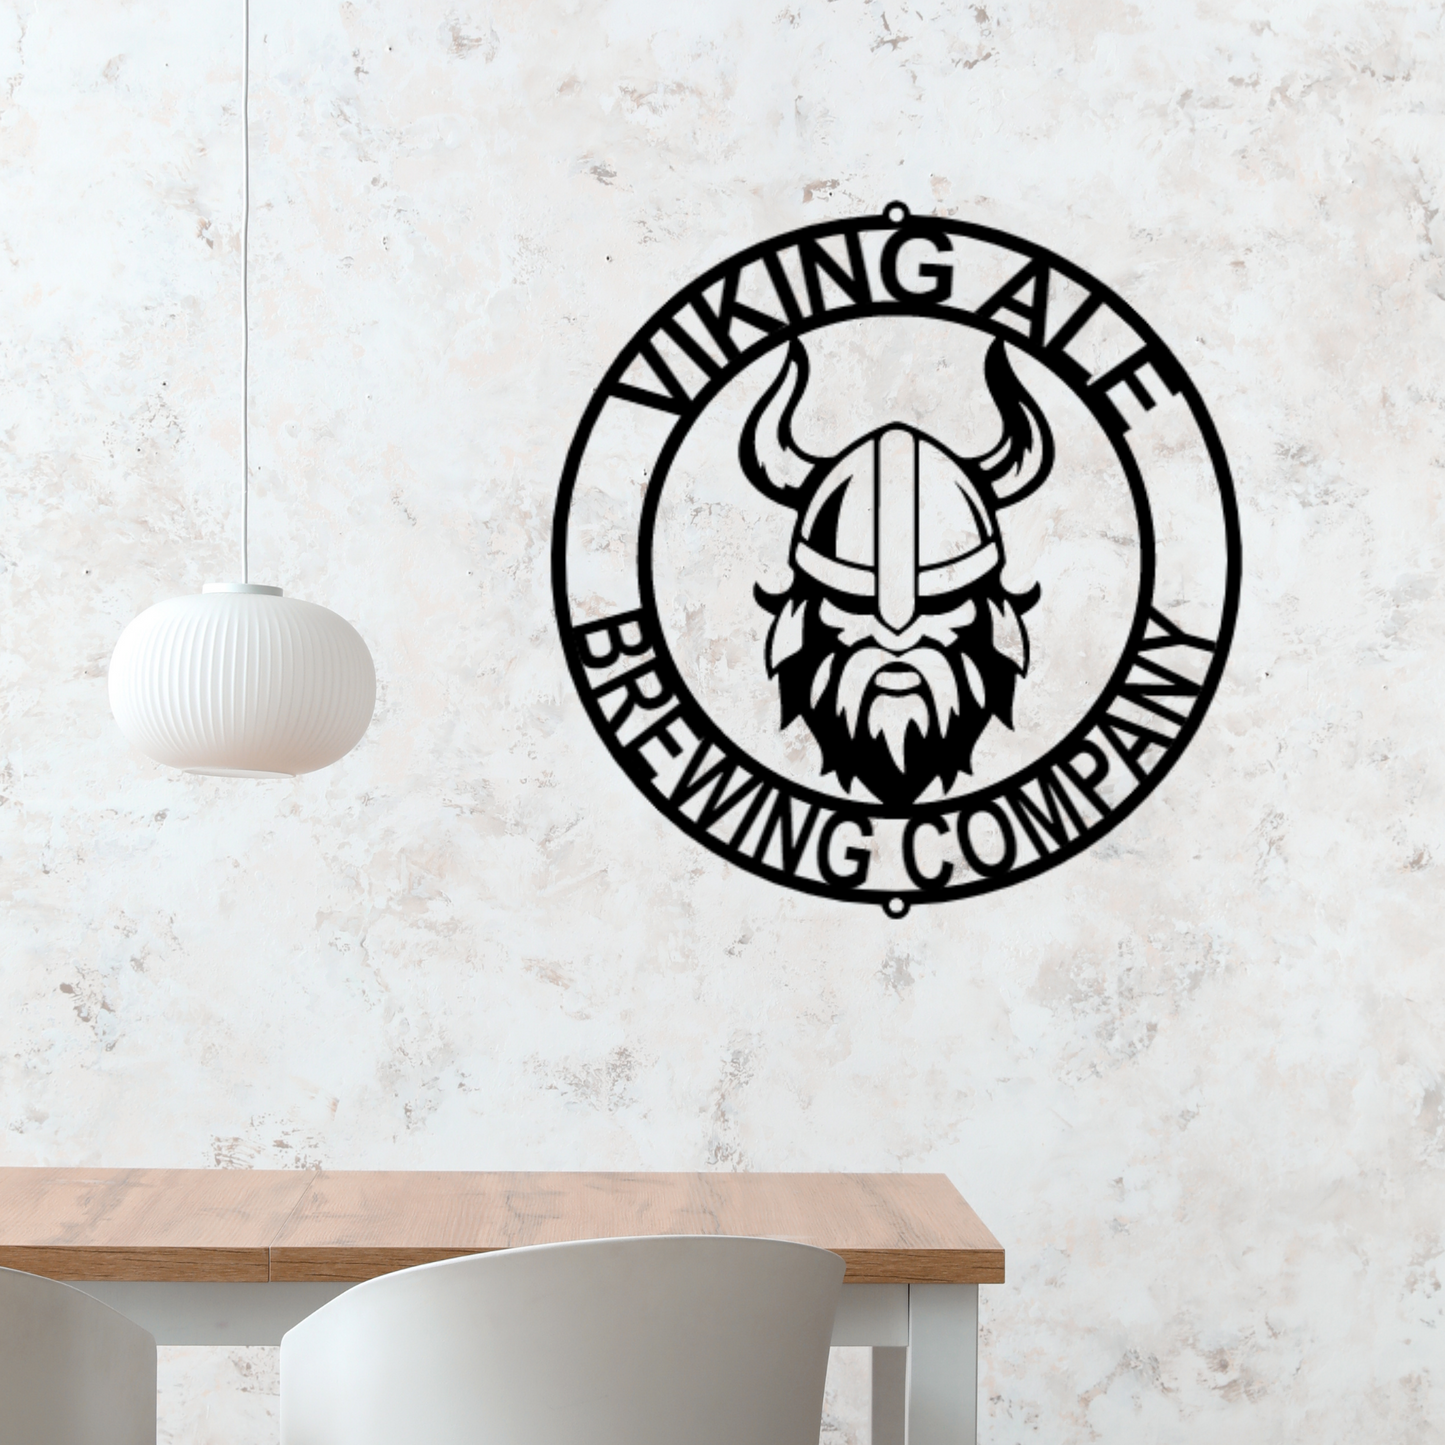 Viking Ring Monogram - Steel Sign, Outdoor Signs, Metal Signs, Metal Decorative Sign, Business Metal Signs Personalized, Metal Monogram